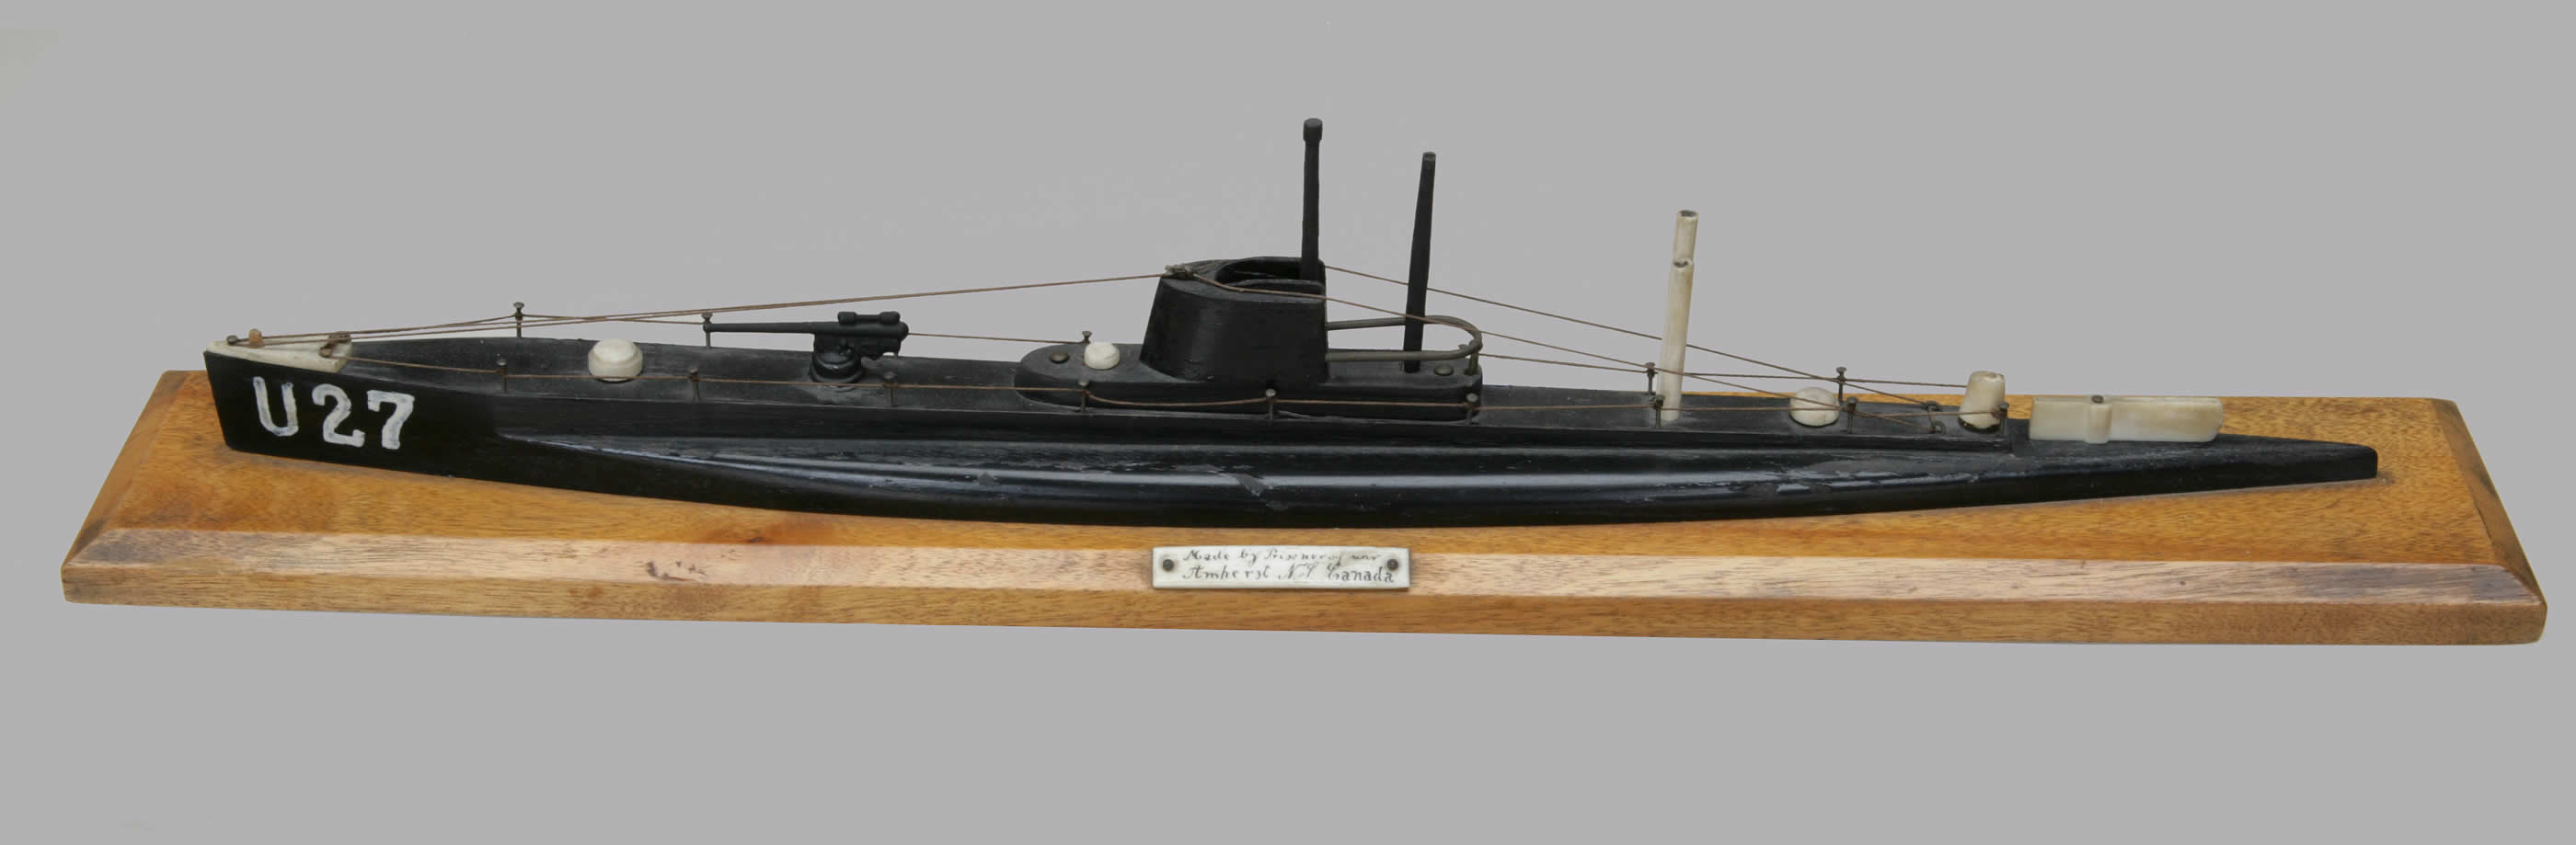 Jouets et maquettes - U-boot U-27